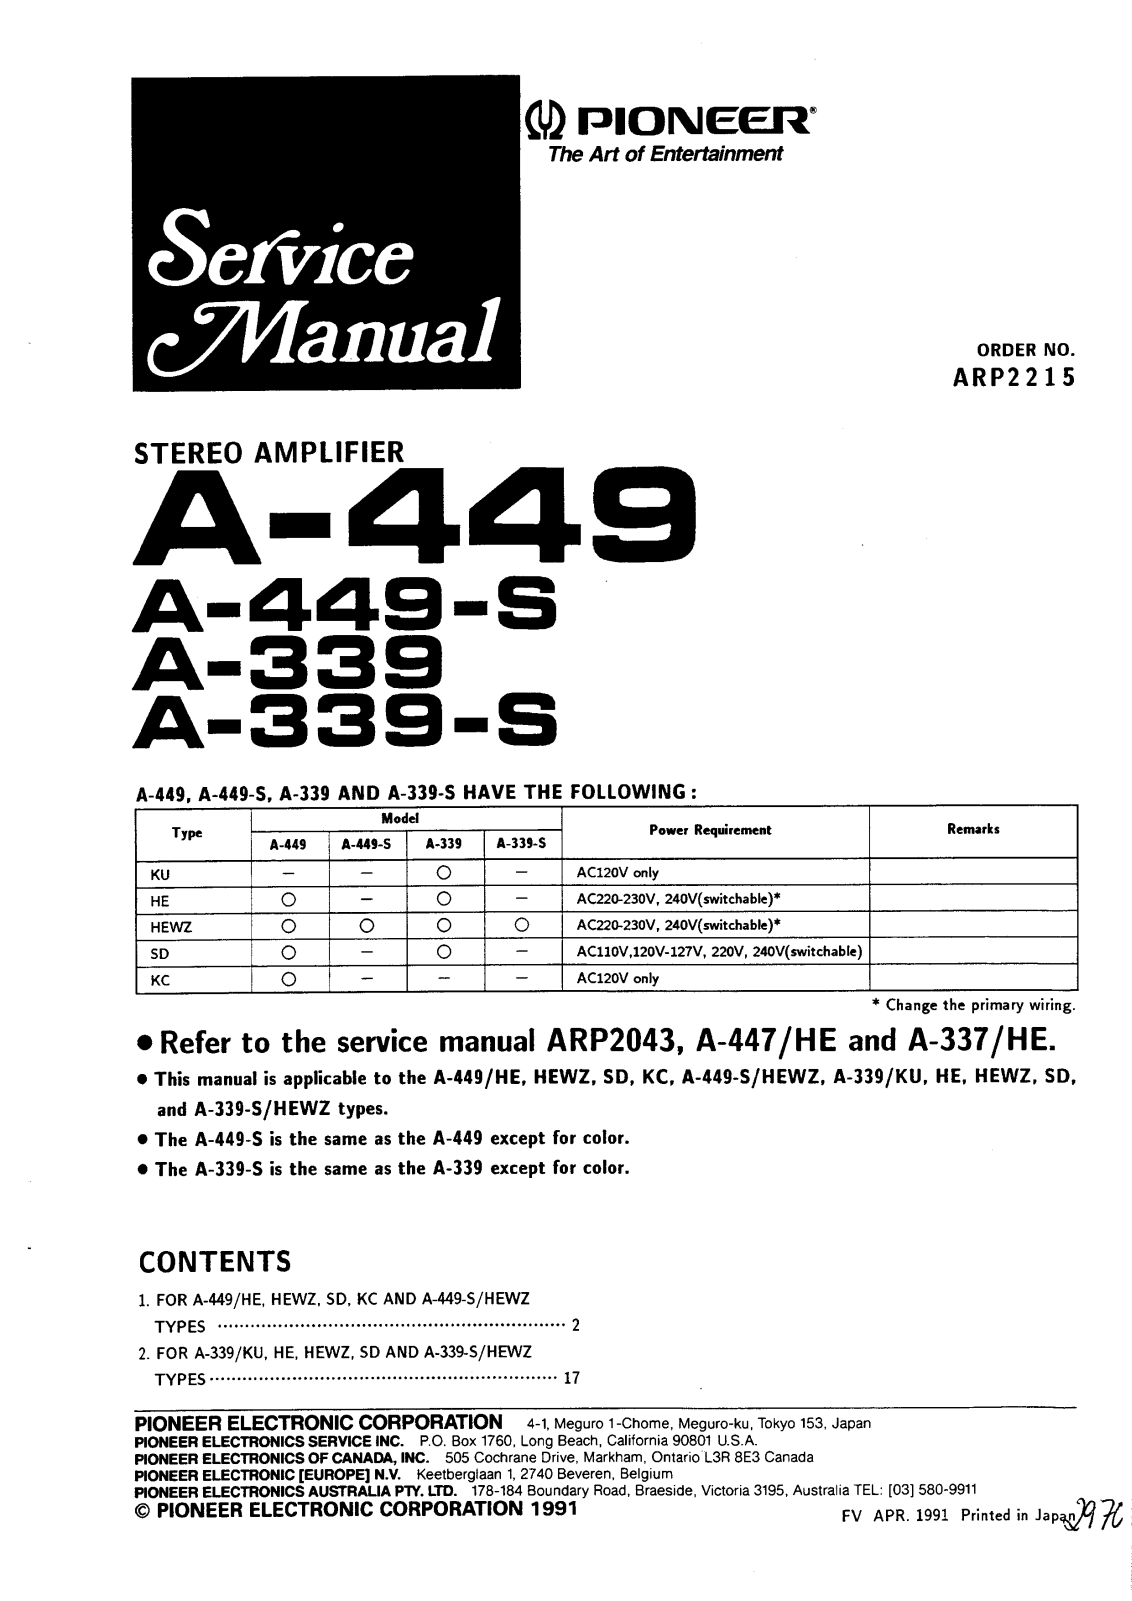 Pioneer A-339, A-449 Service manual